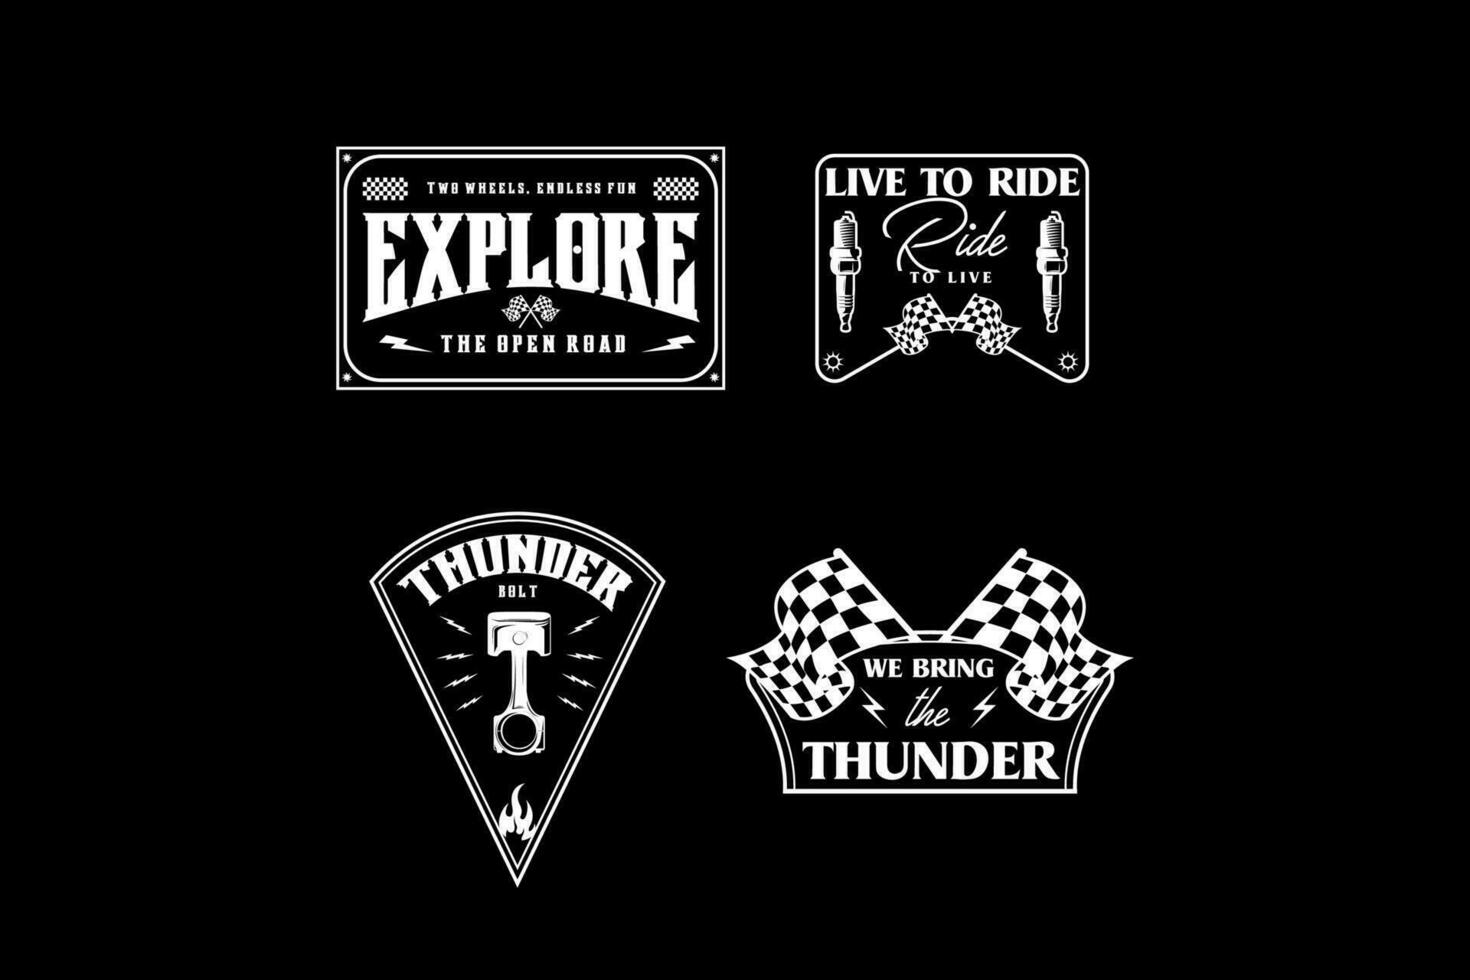 motociclo Vintage ▾ grafico logo vettore design